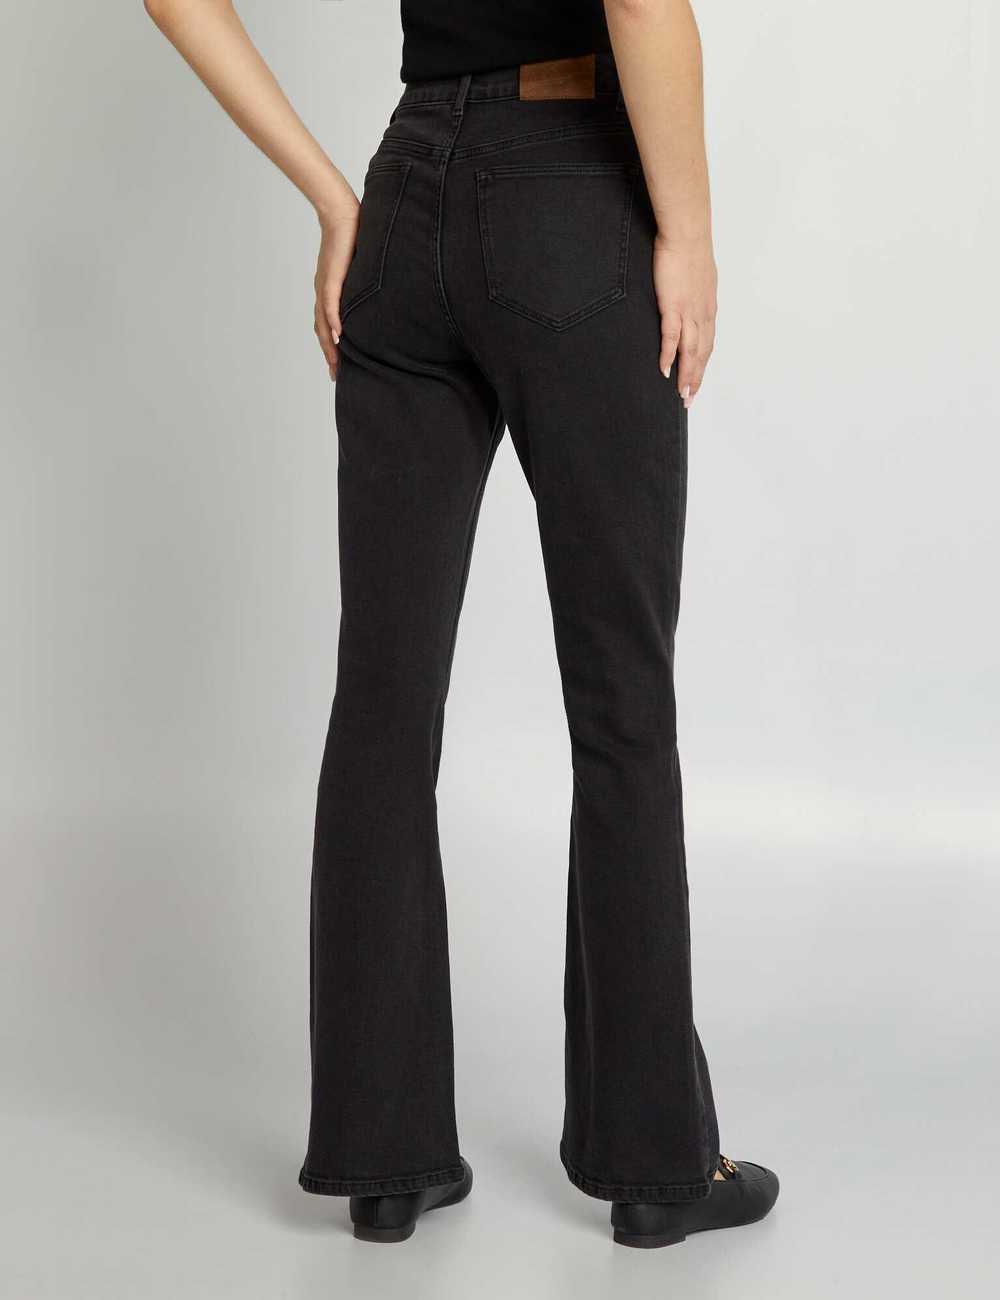 Buy Flared jeans - L30 Online in Dubai & the UAE